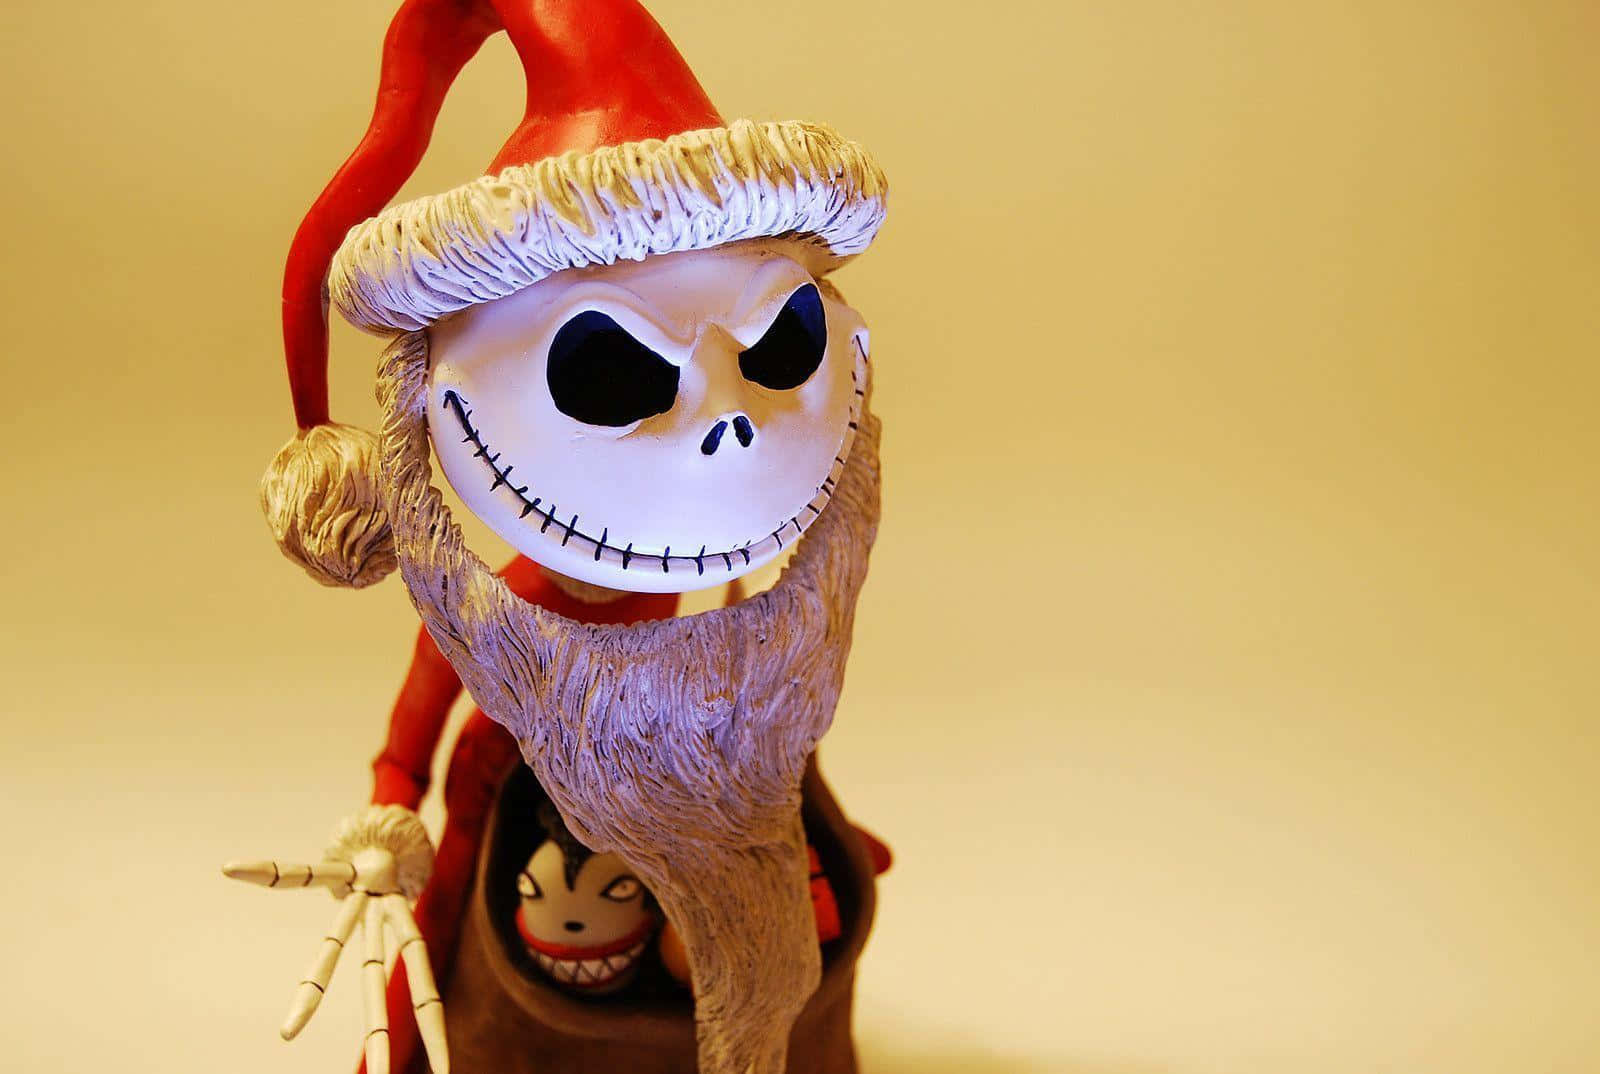 Haunted Halloween, Tim Burton's Nightmare Before Christmas